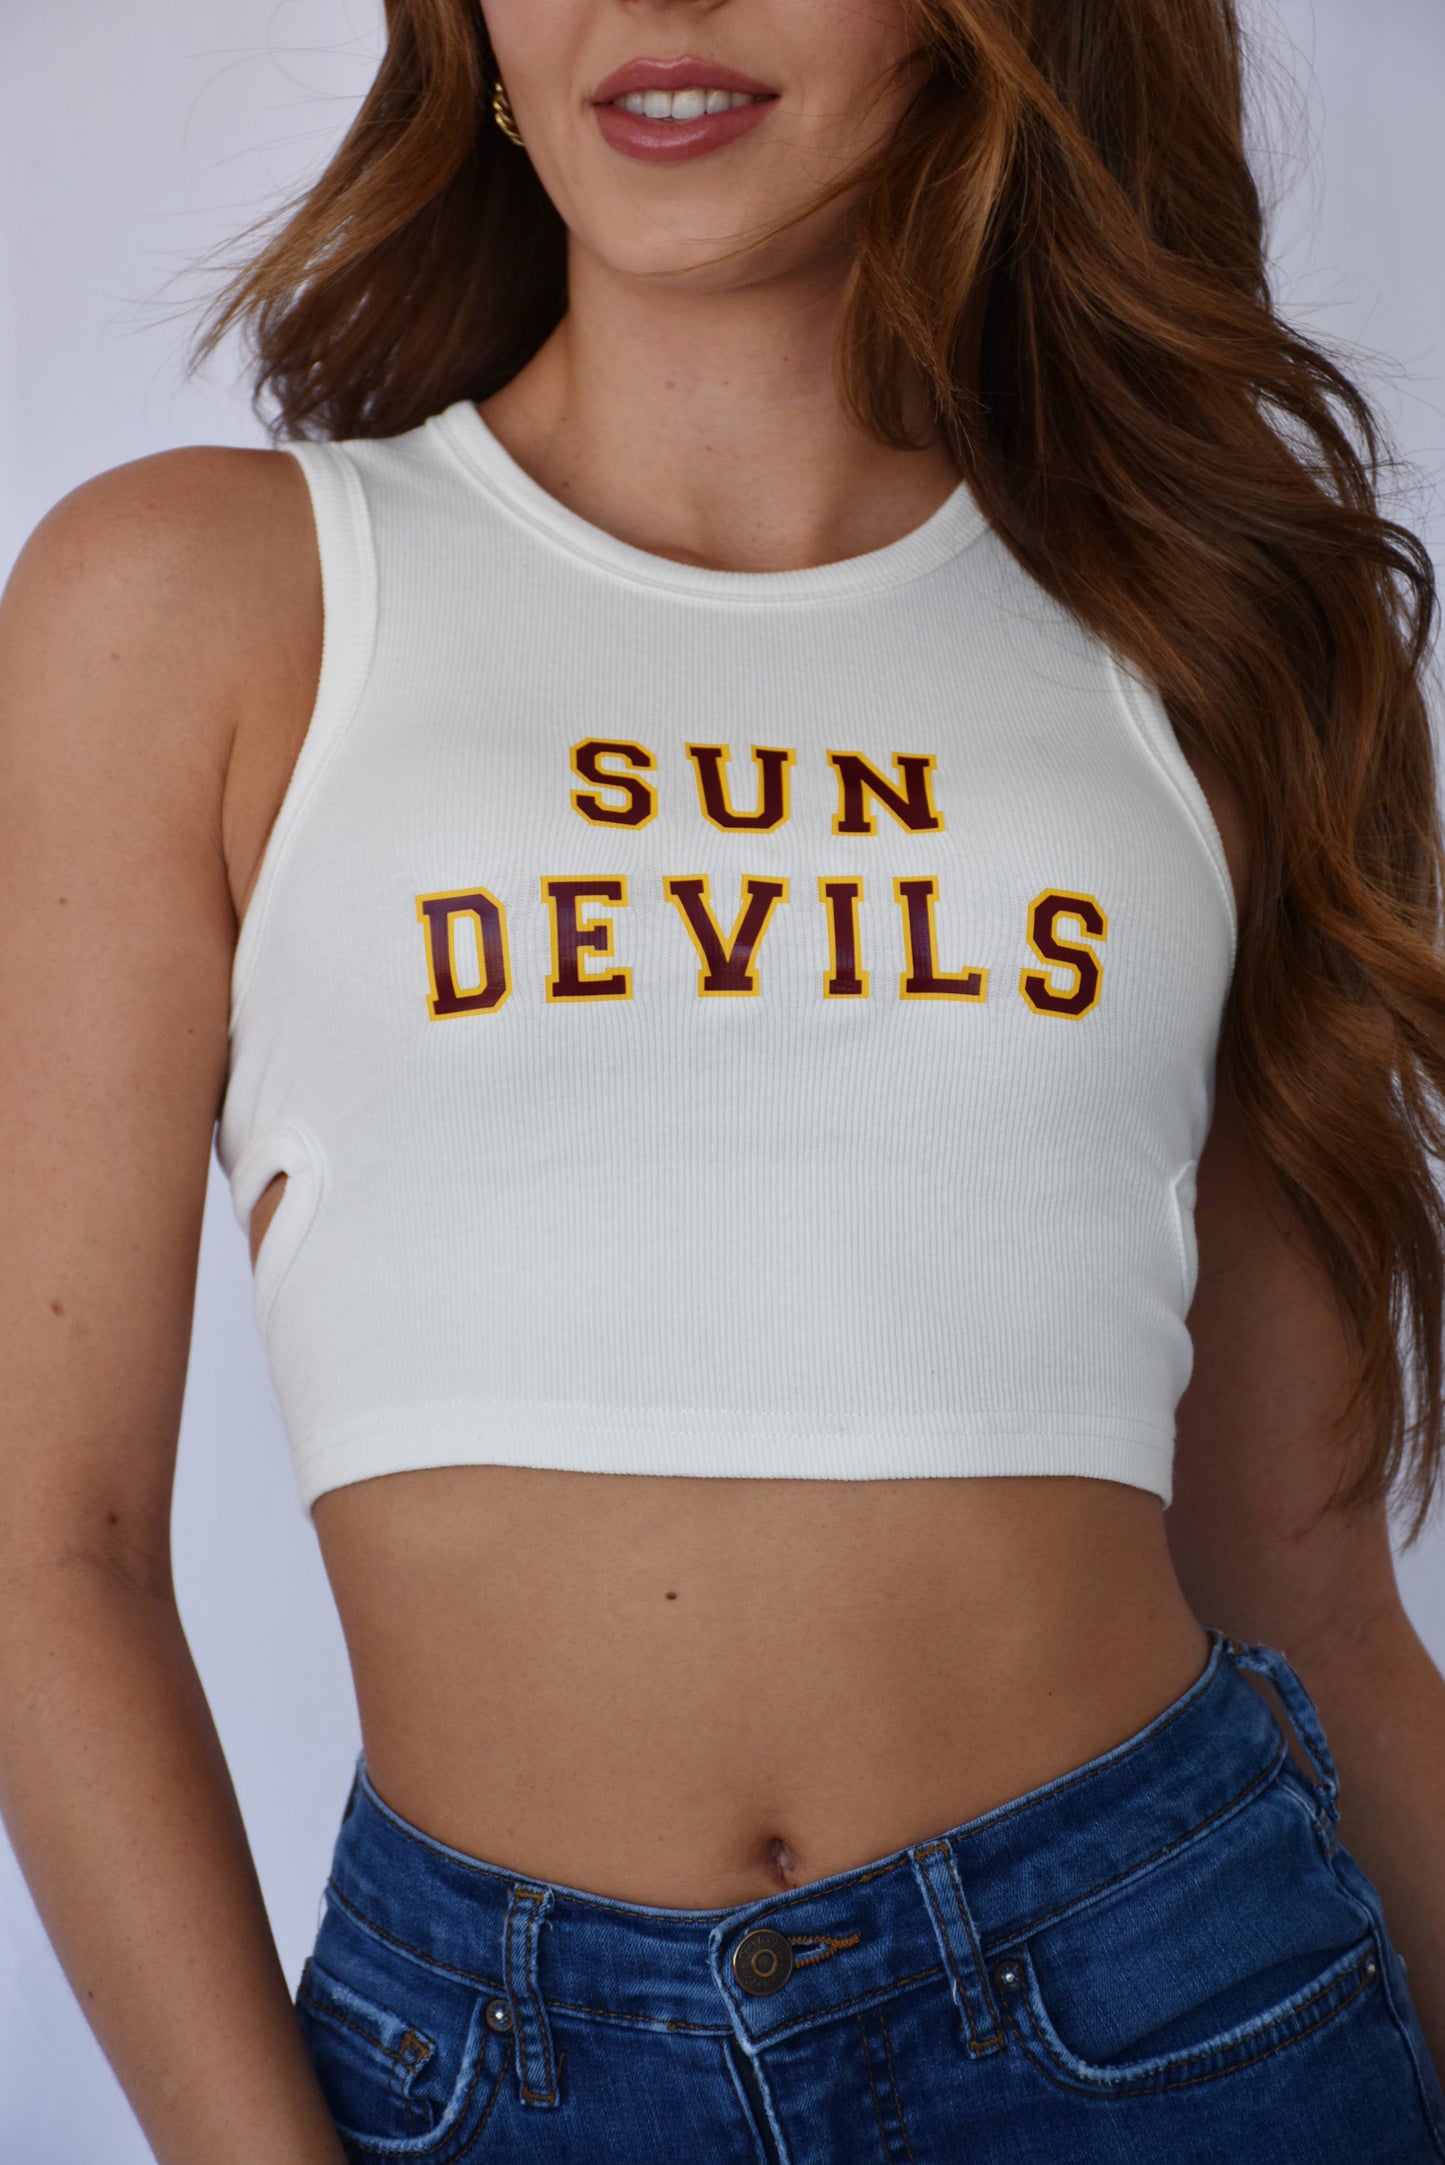 Cutout Crew Crop Top - Arizona State University - Sun Devils (ASU)